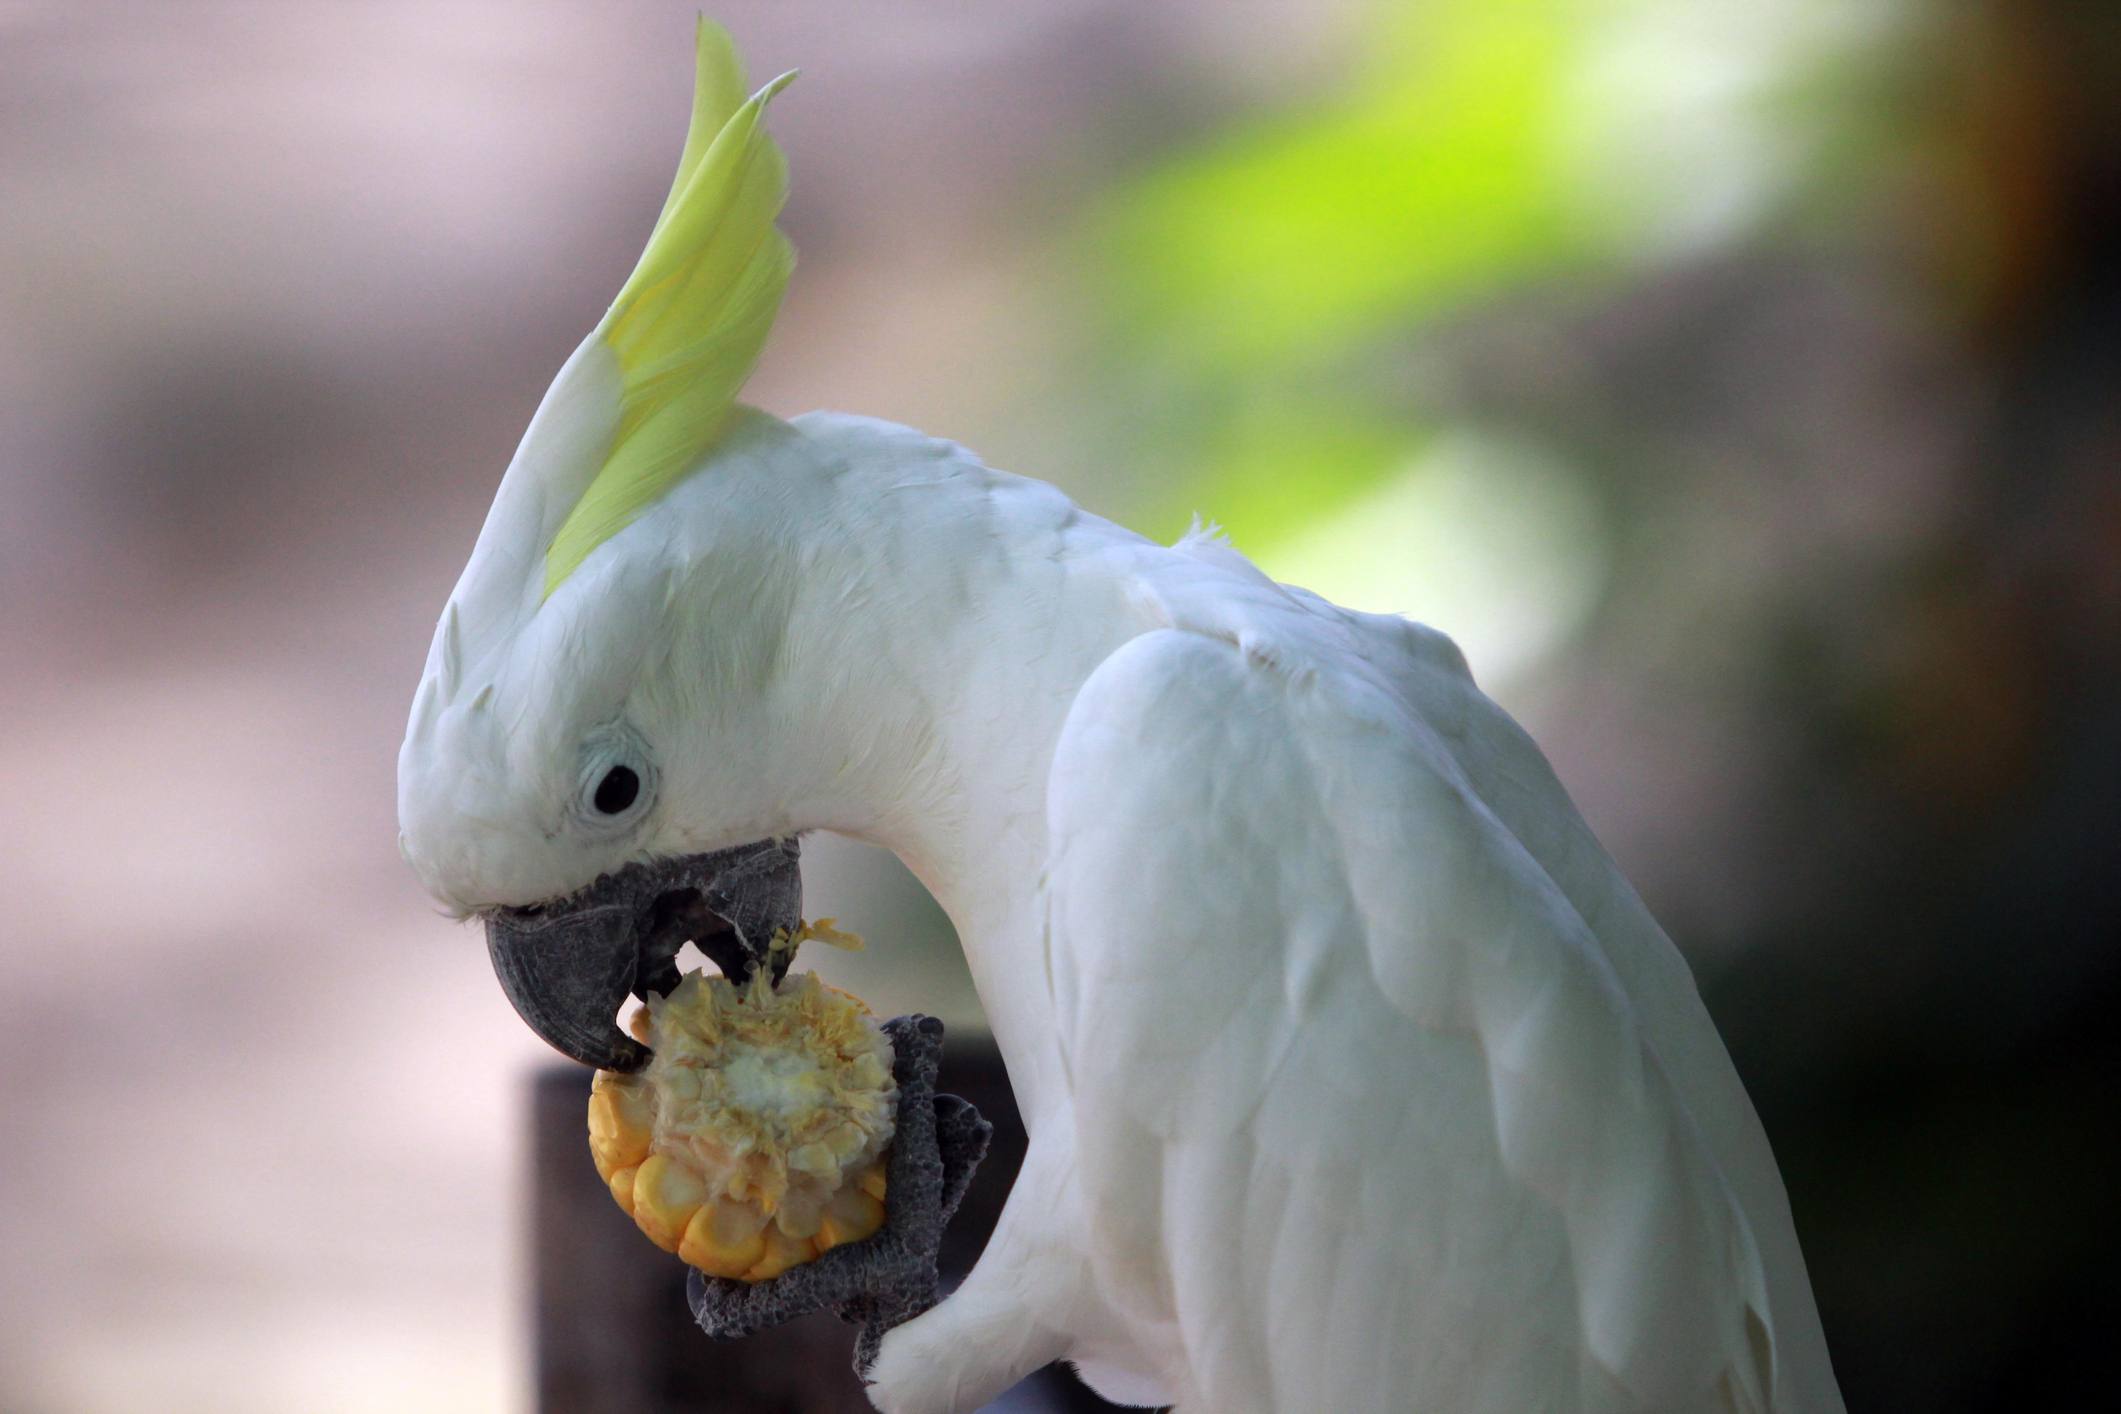 Cockatoo eating corn on a cob